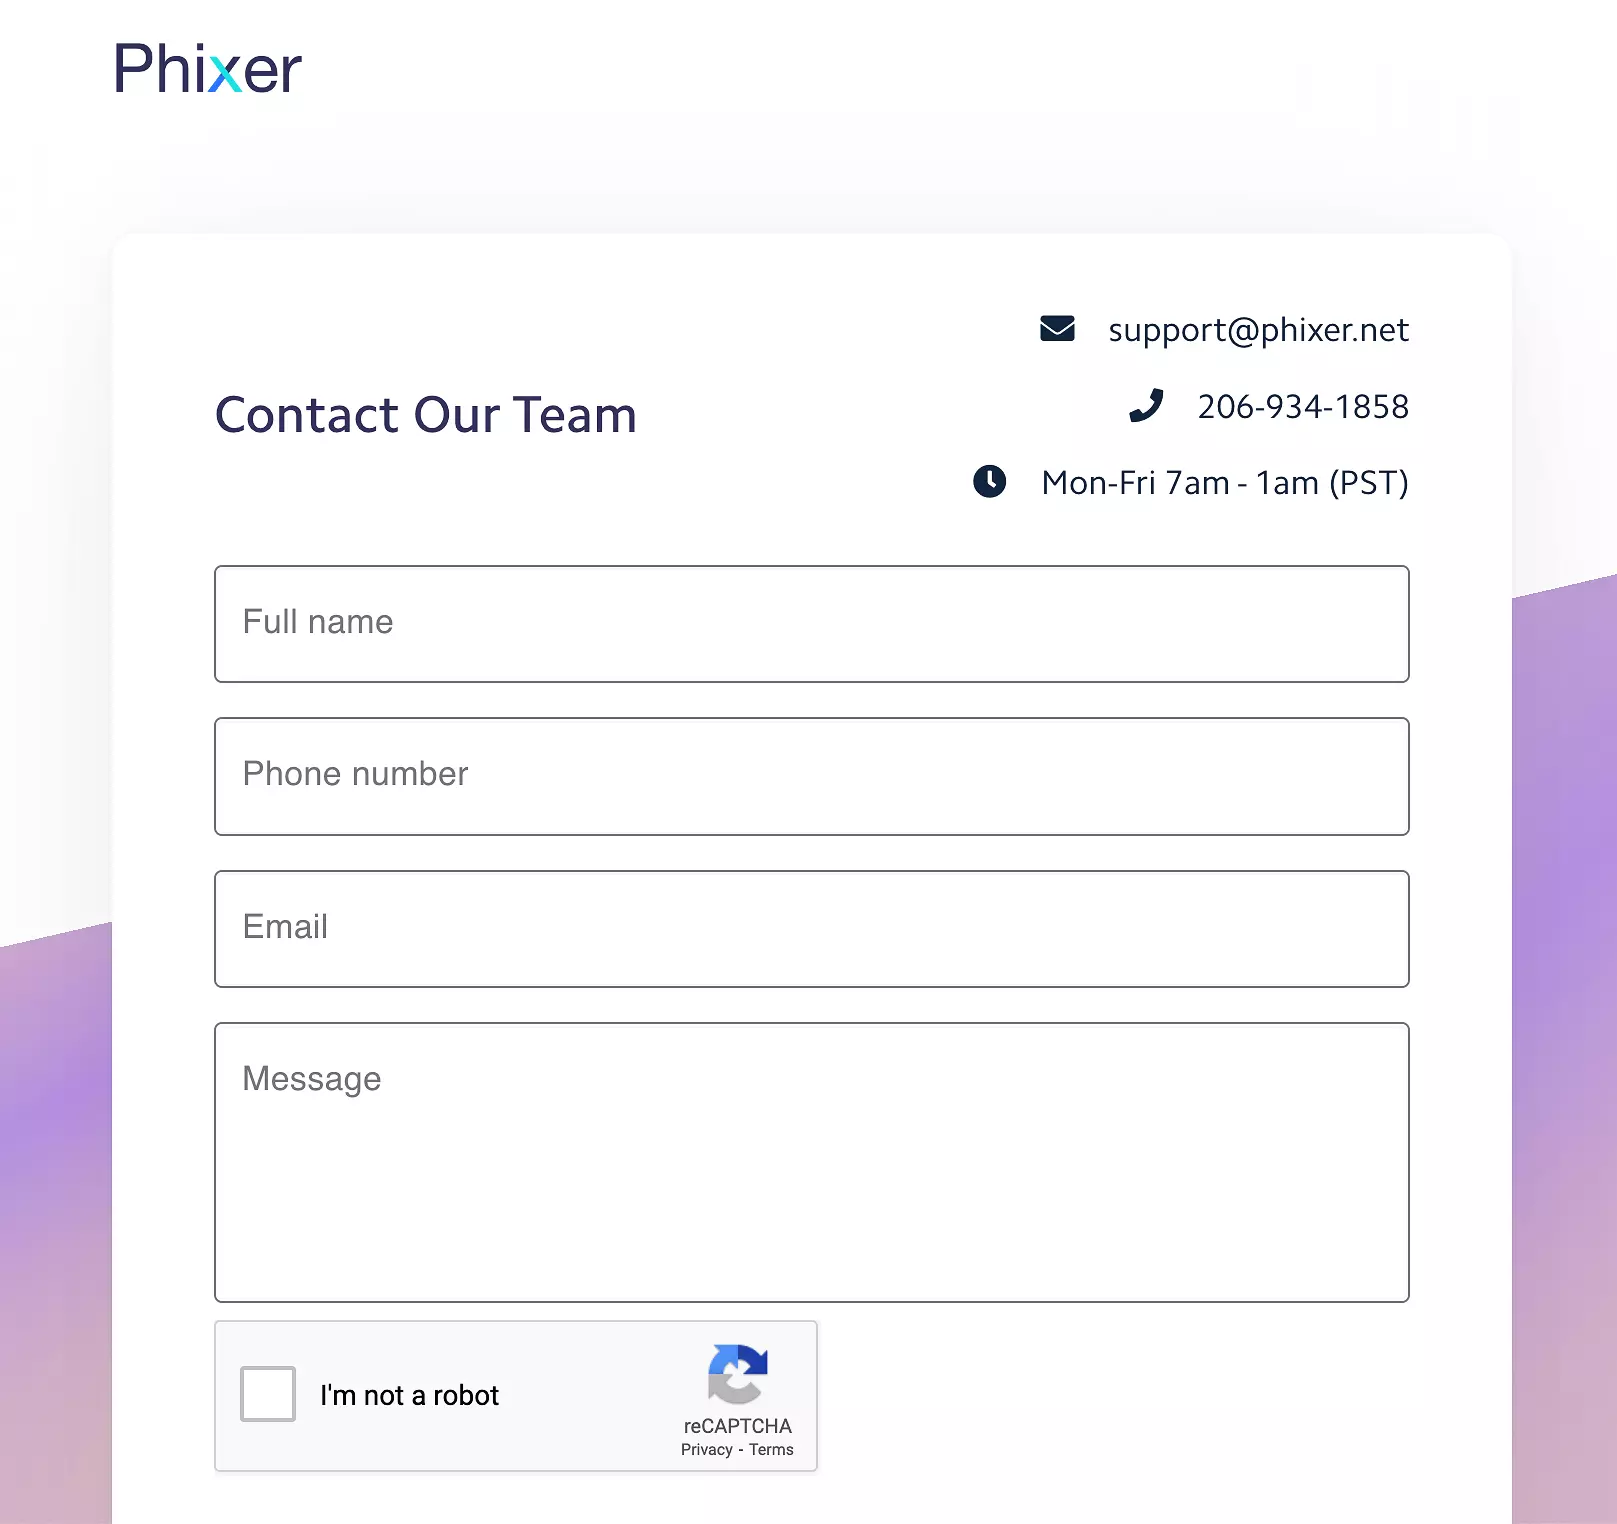 Phixer Customer Support